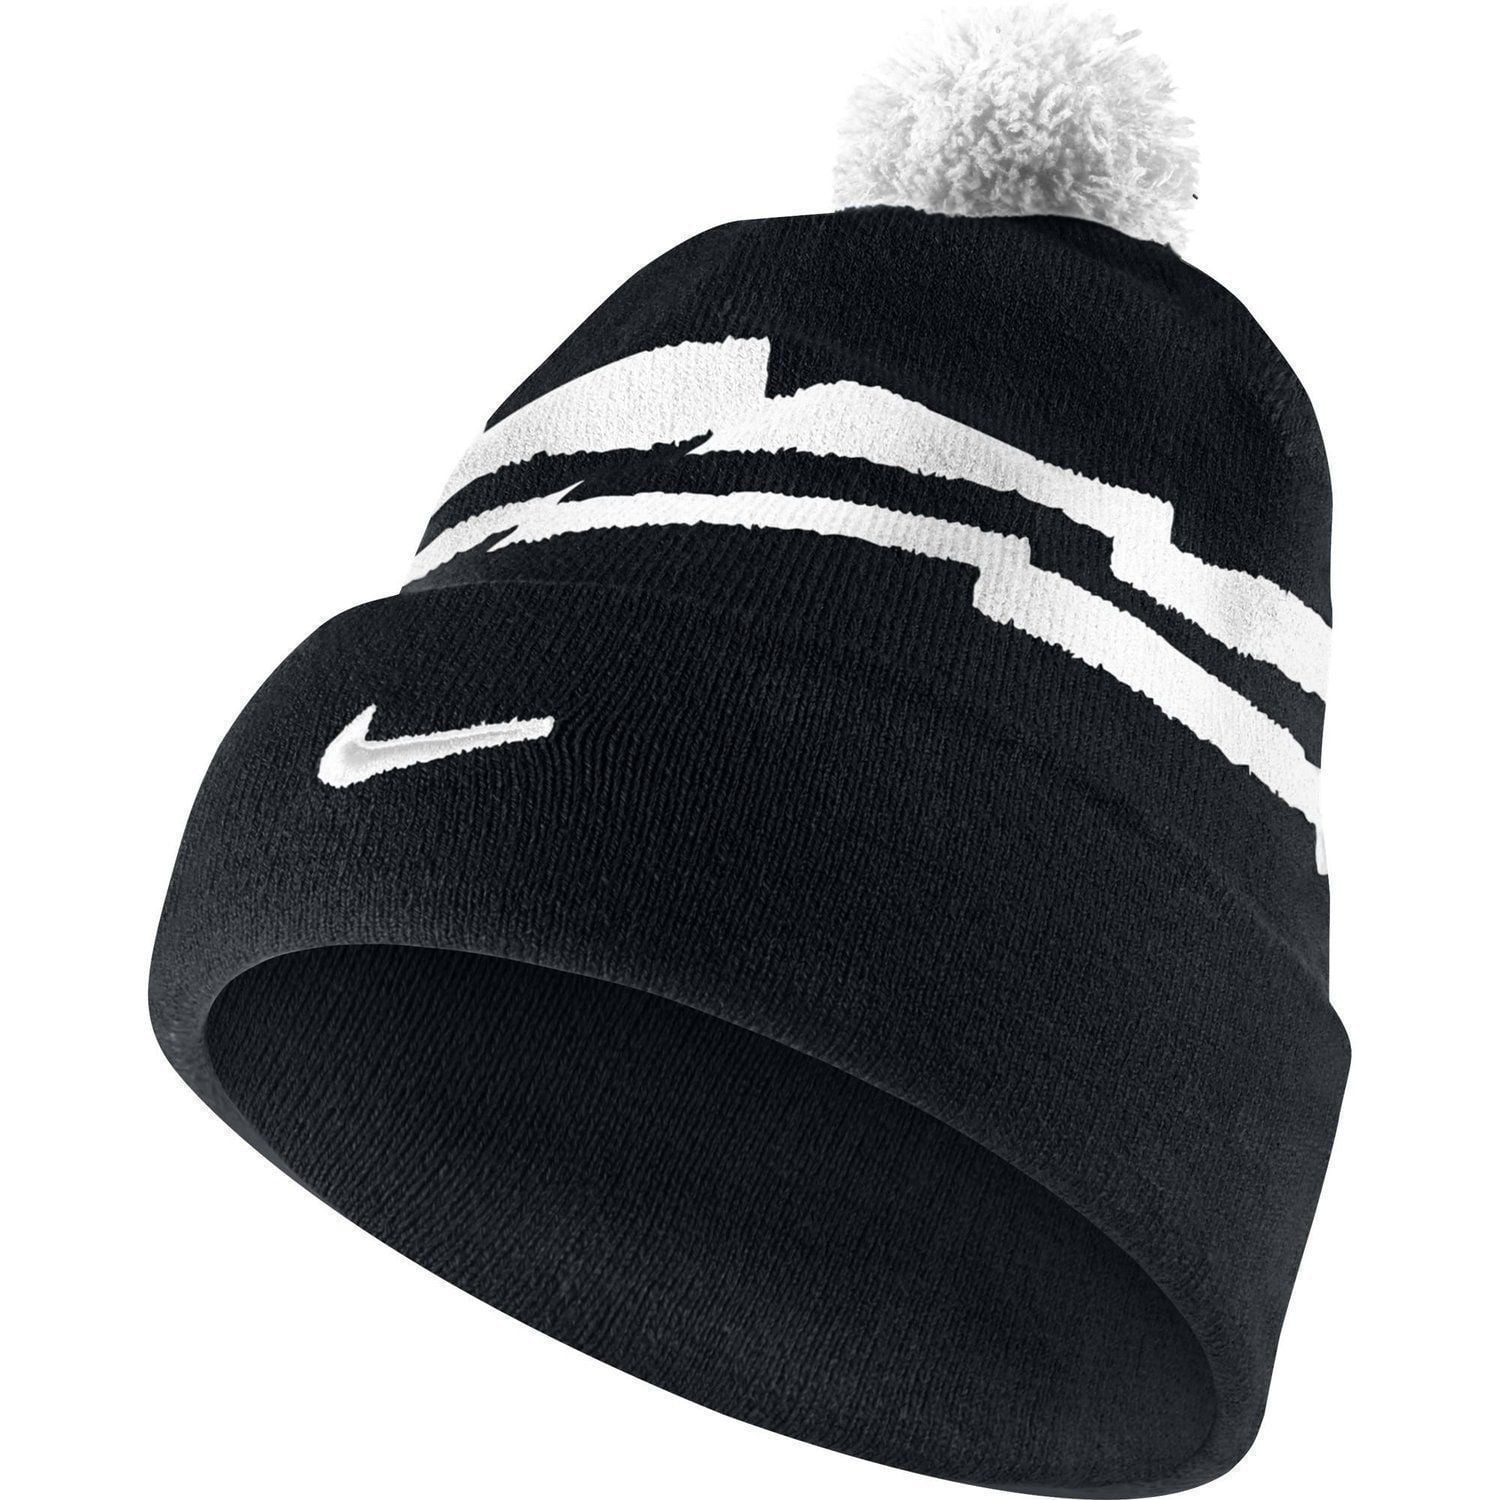 Nike Unisex Adult Pom Knit Beanie Hat Black White One Size 688769 ...